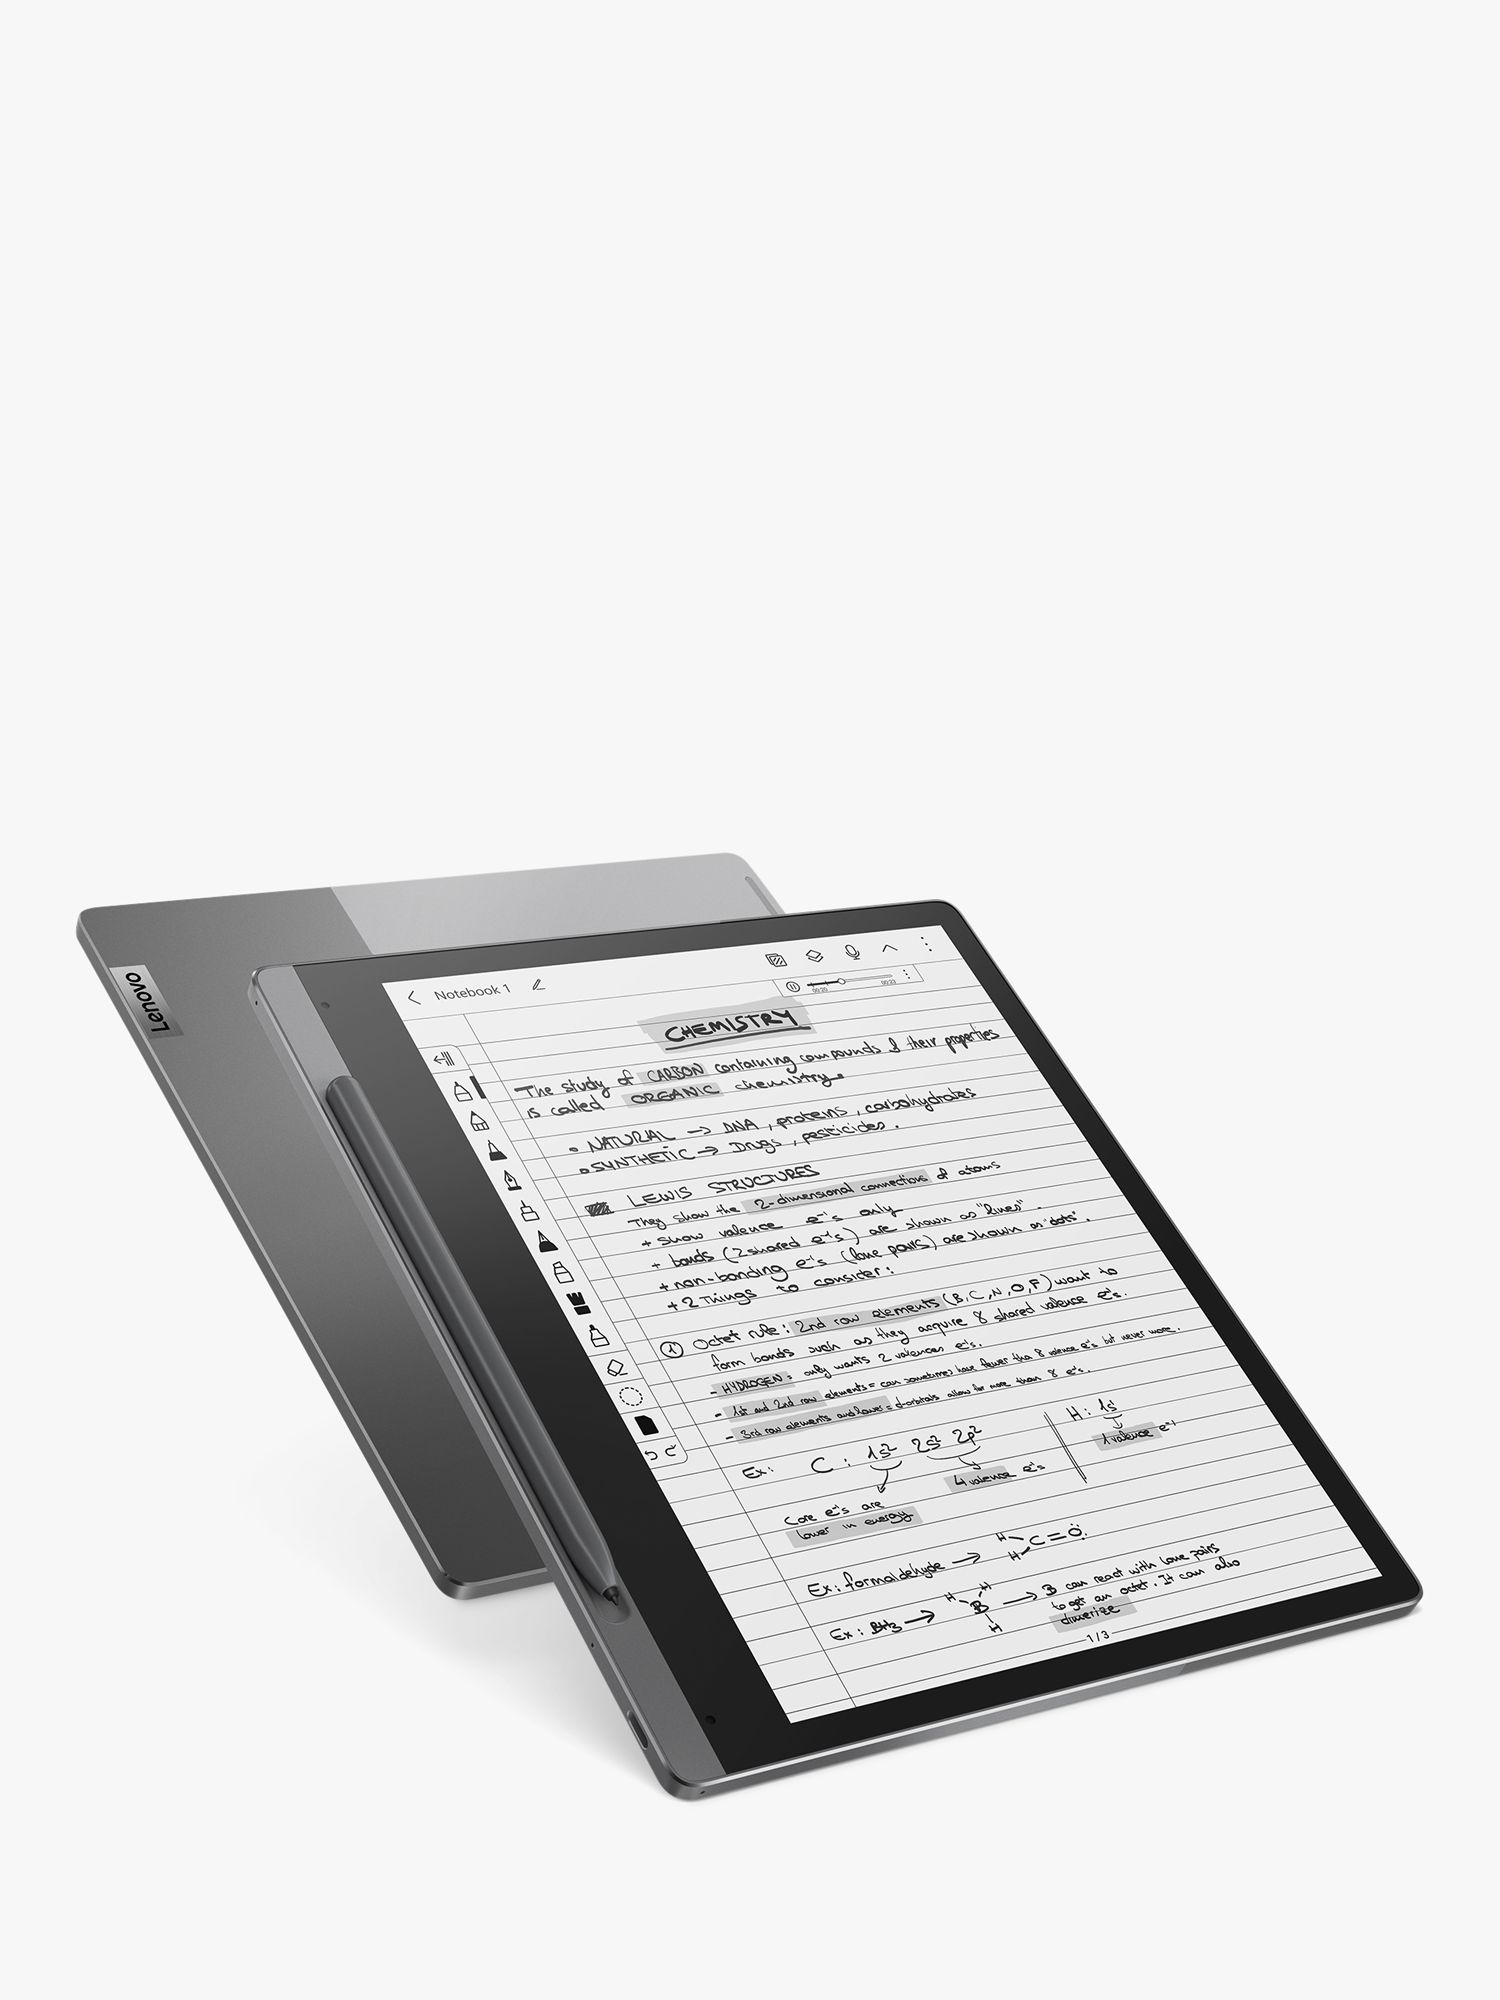 Lenovo removes the Lenovo Smart Paper e-note from their website - Good  e-Reader